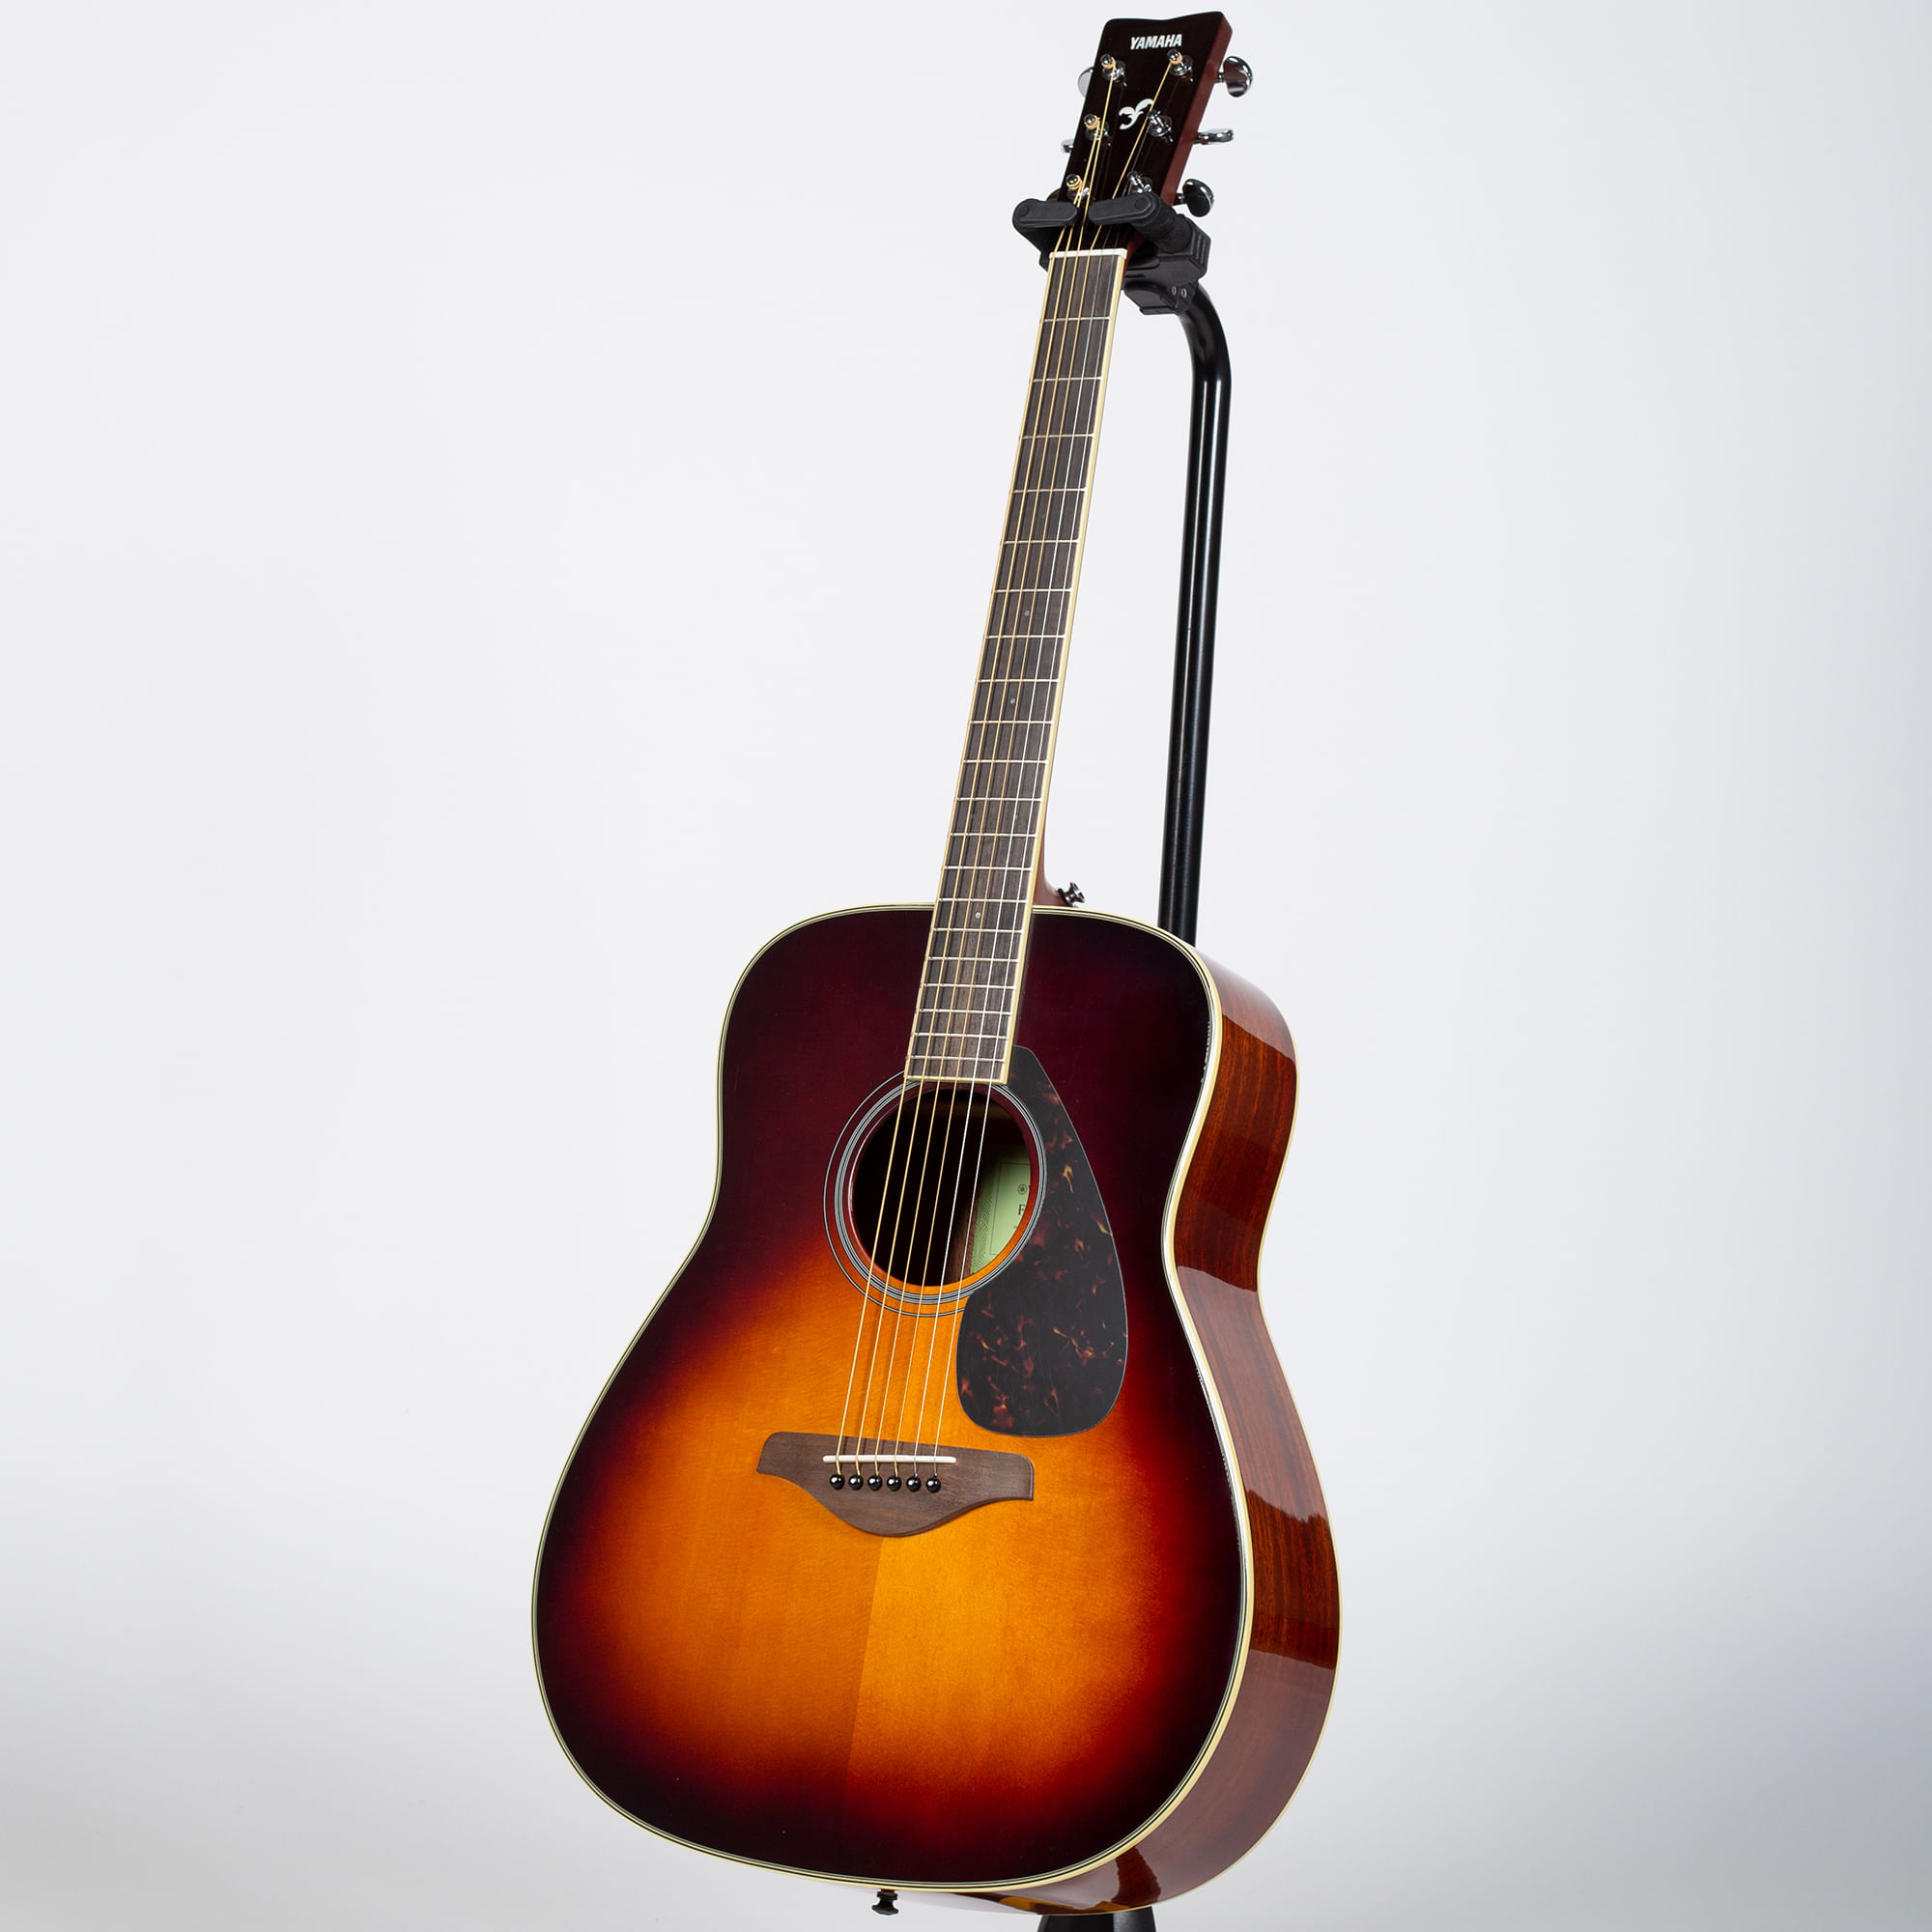 Yamaha FG820 Acoustic Guitar - Brown Sunburst